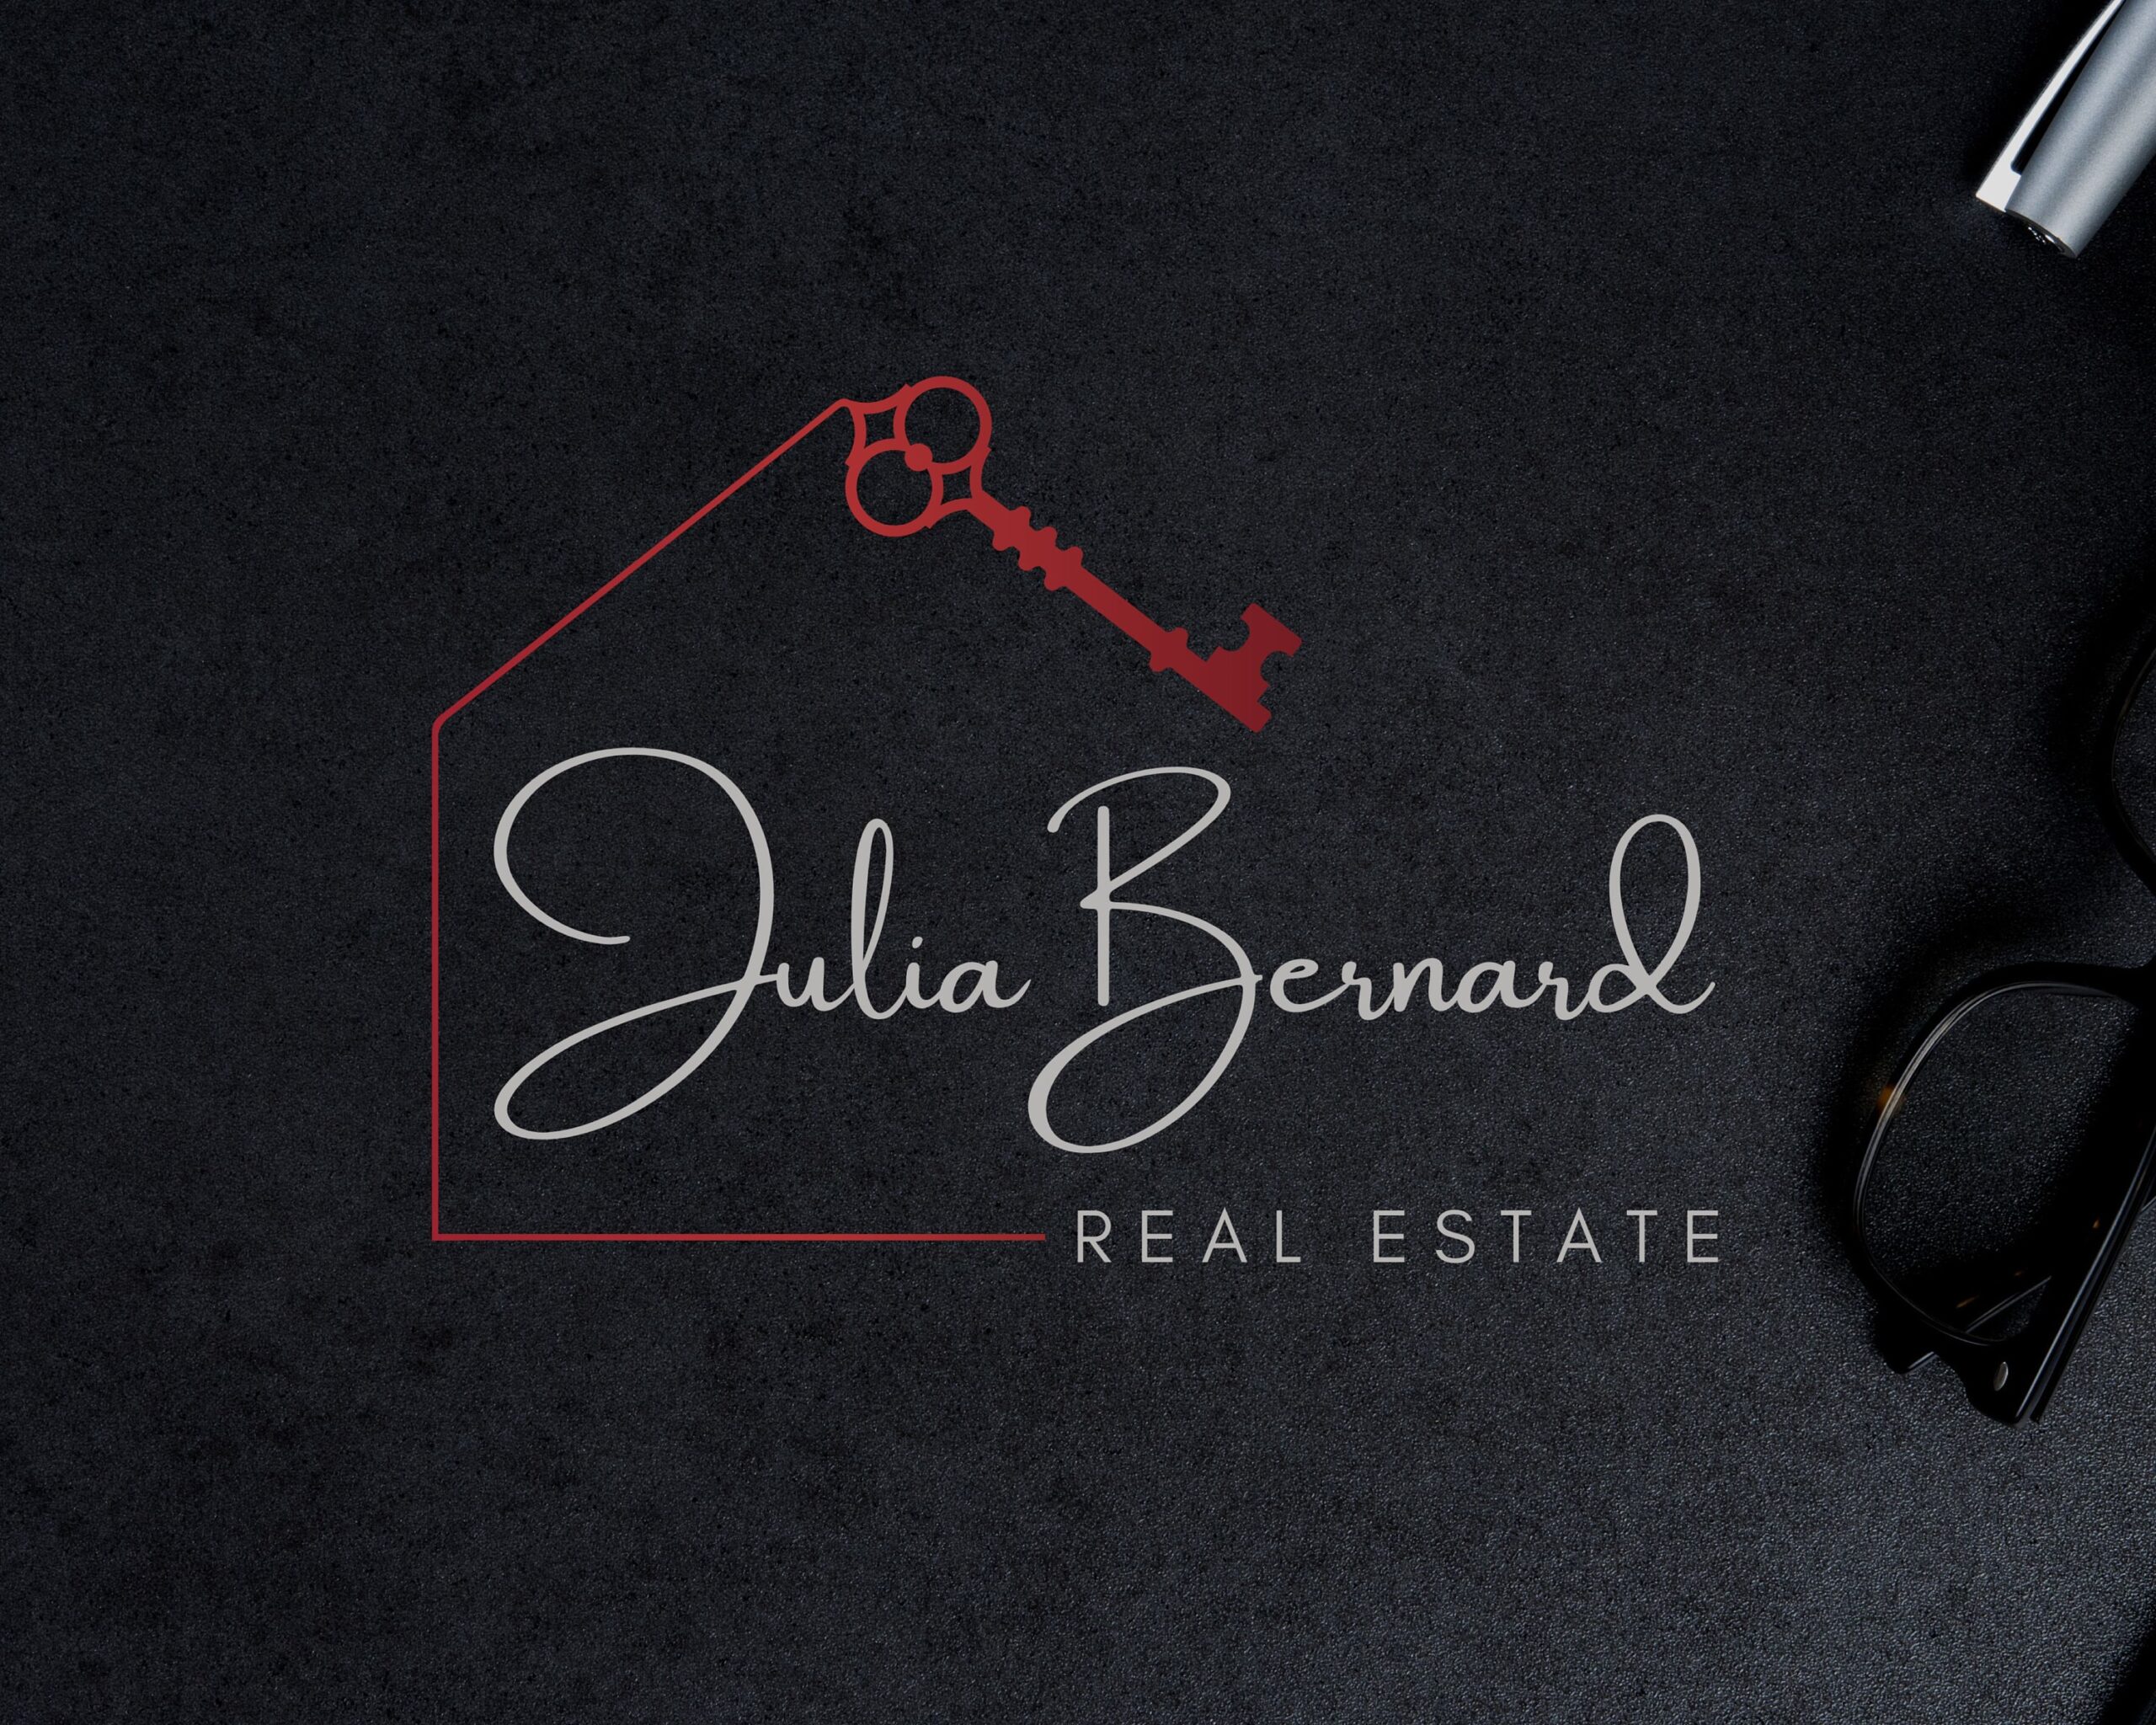 Premade Real Estate Logo Design, Red House and Key Signature Logo, Agent Logo, Broker Logo, High-Quality Branding for Real Estate Agents